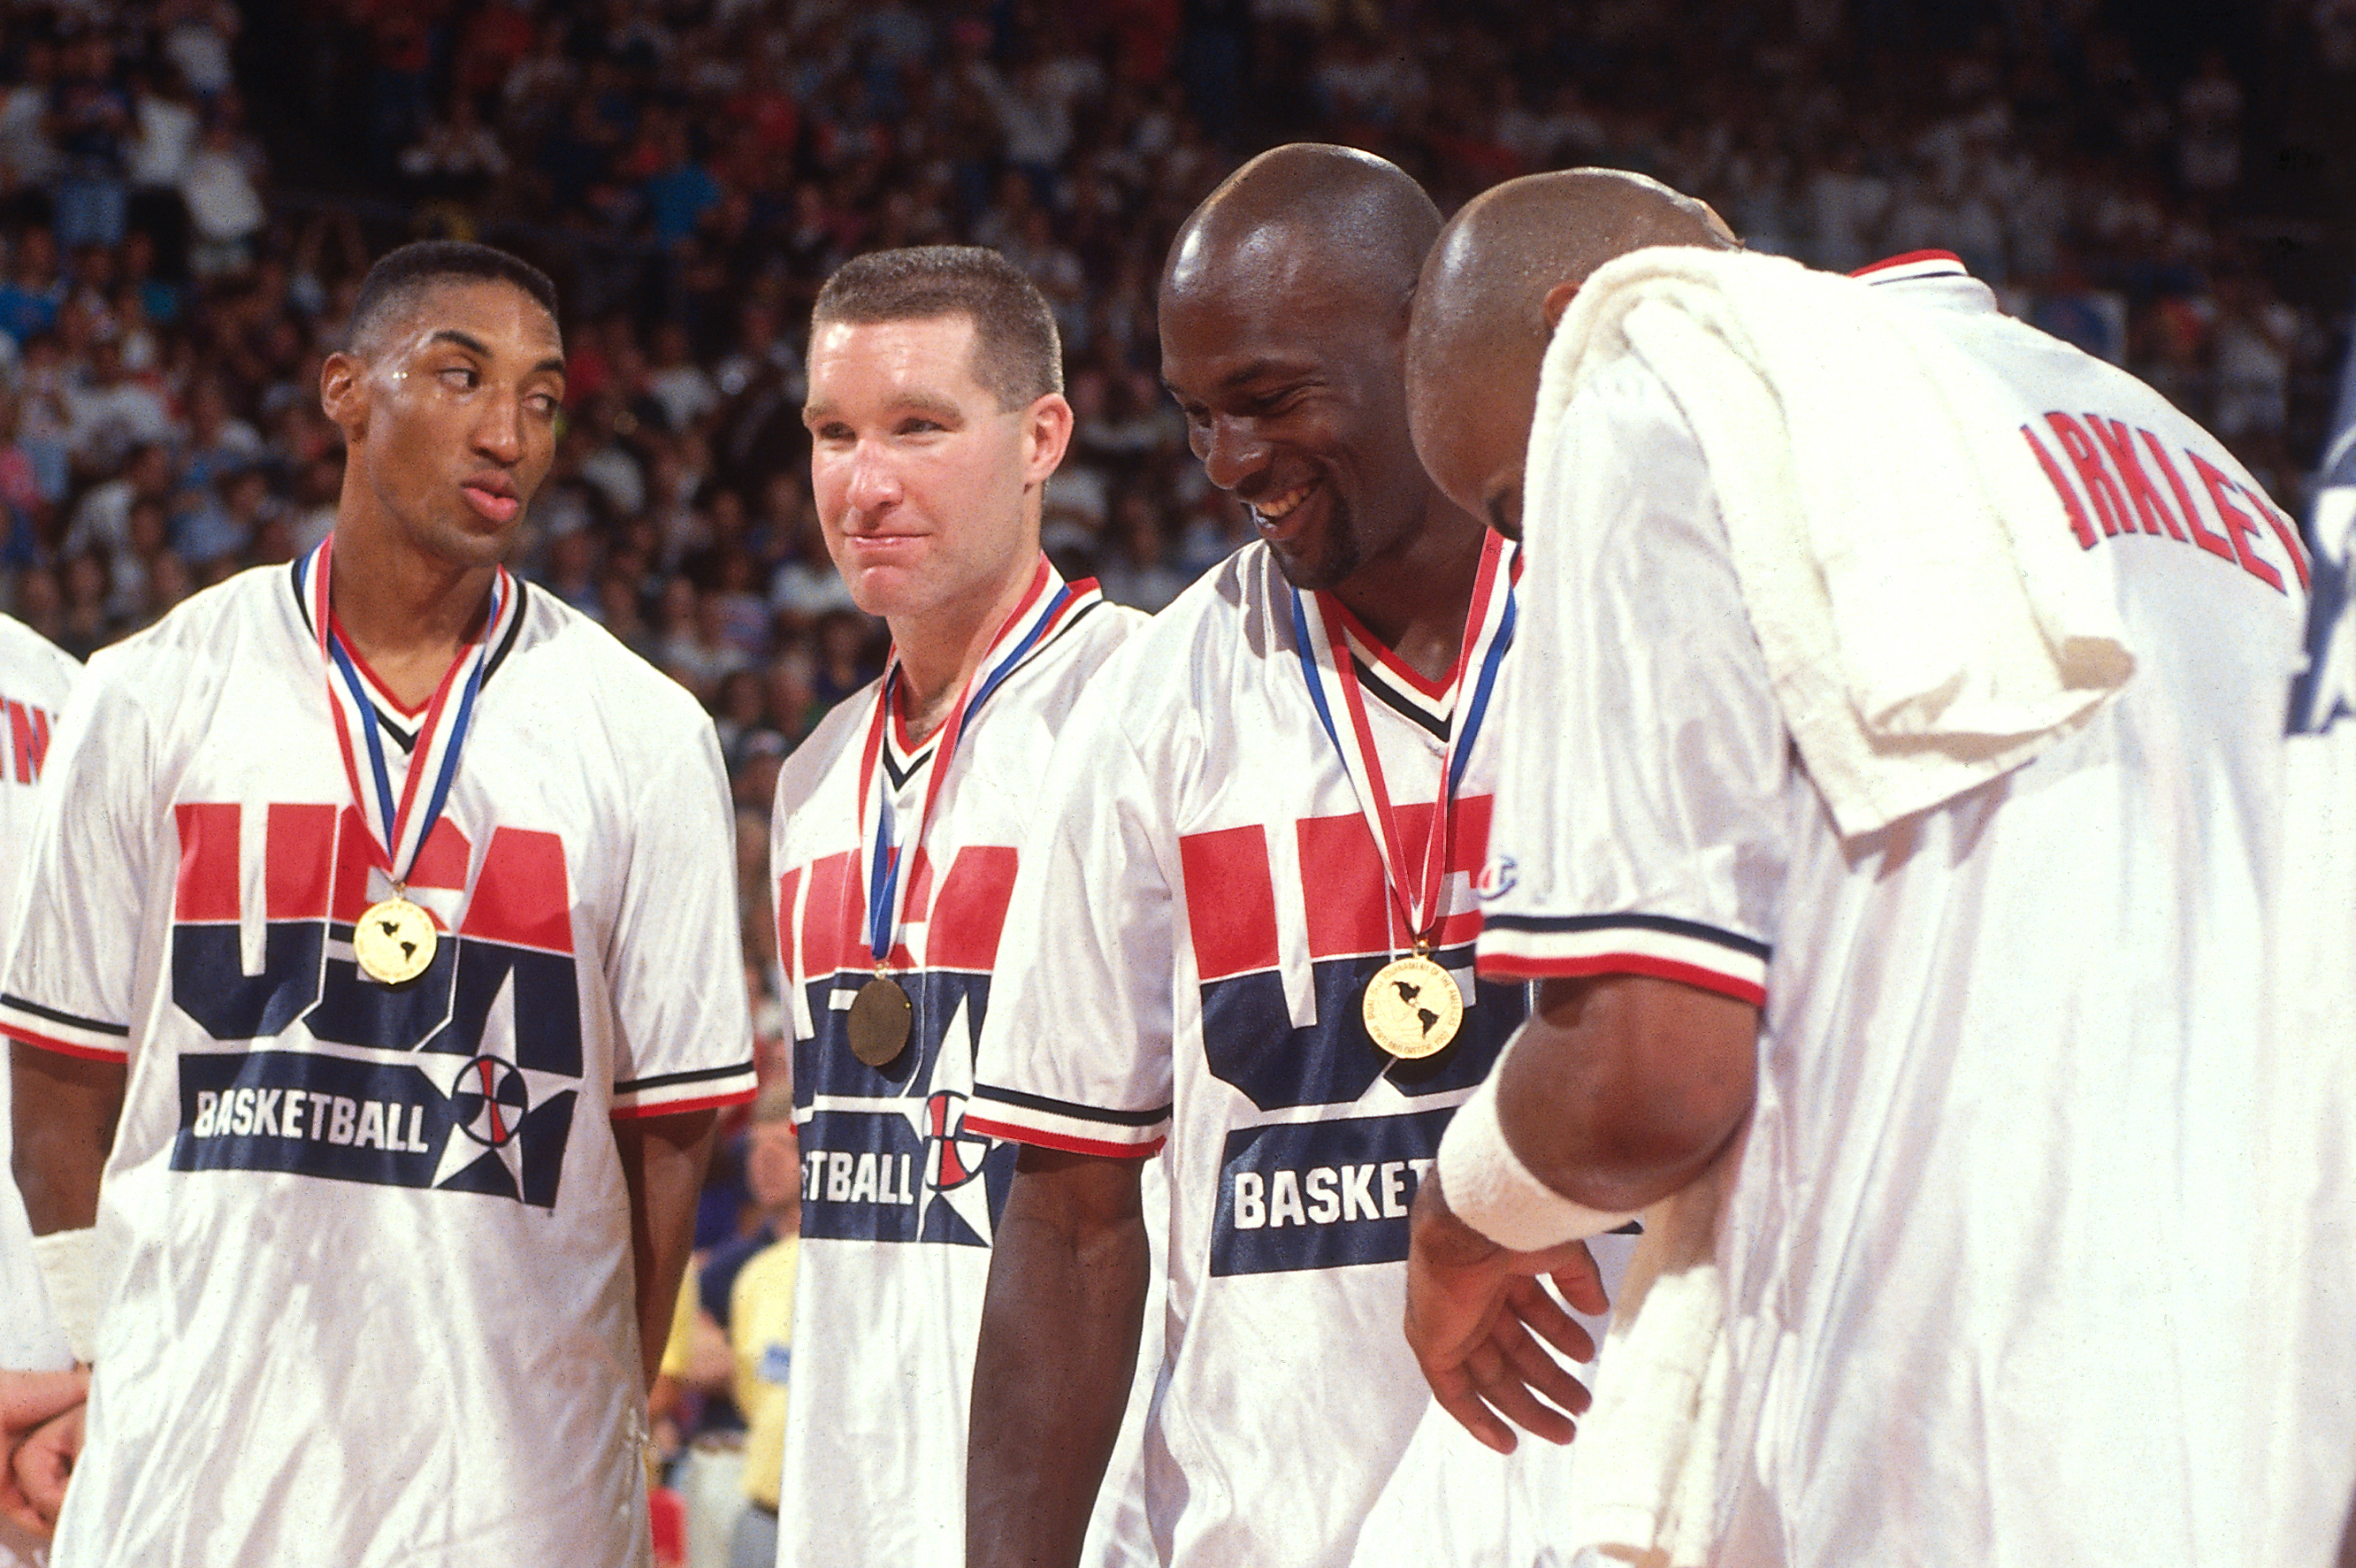 1992 USA Dream Team  Team usa basketball, Usa dream team, Olympic  basketball